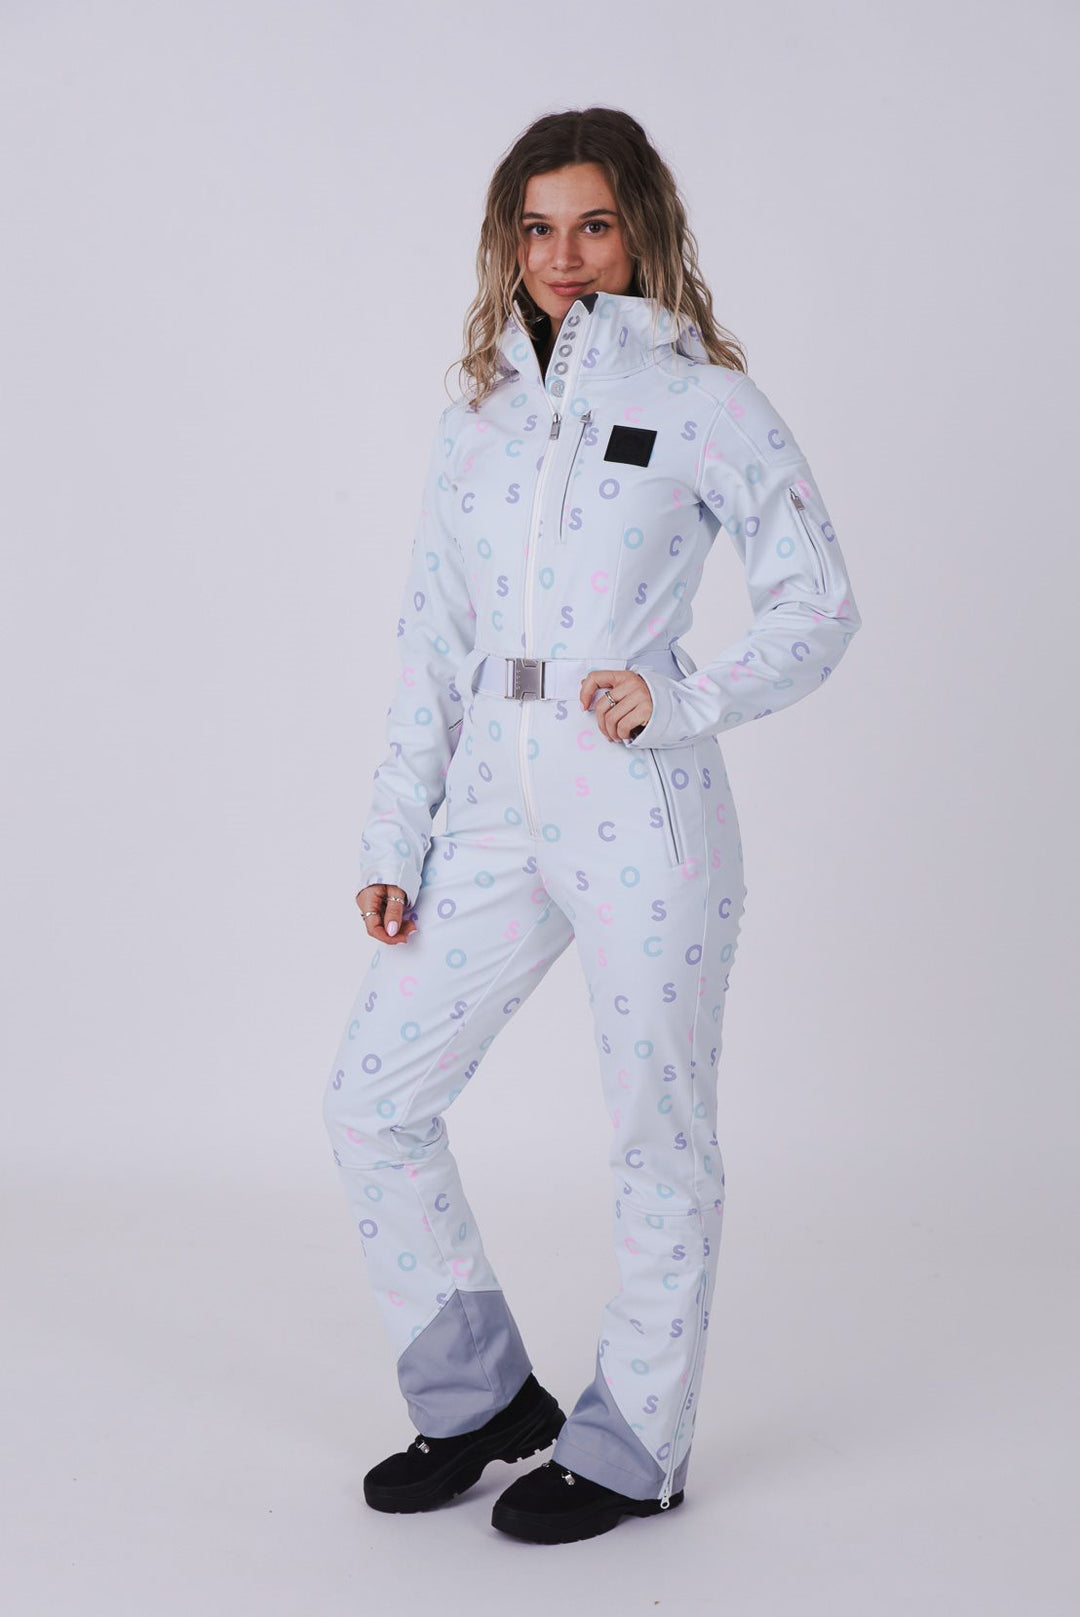 White OOSC Print Chic Ski Suit